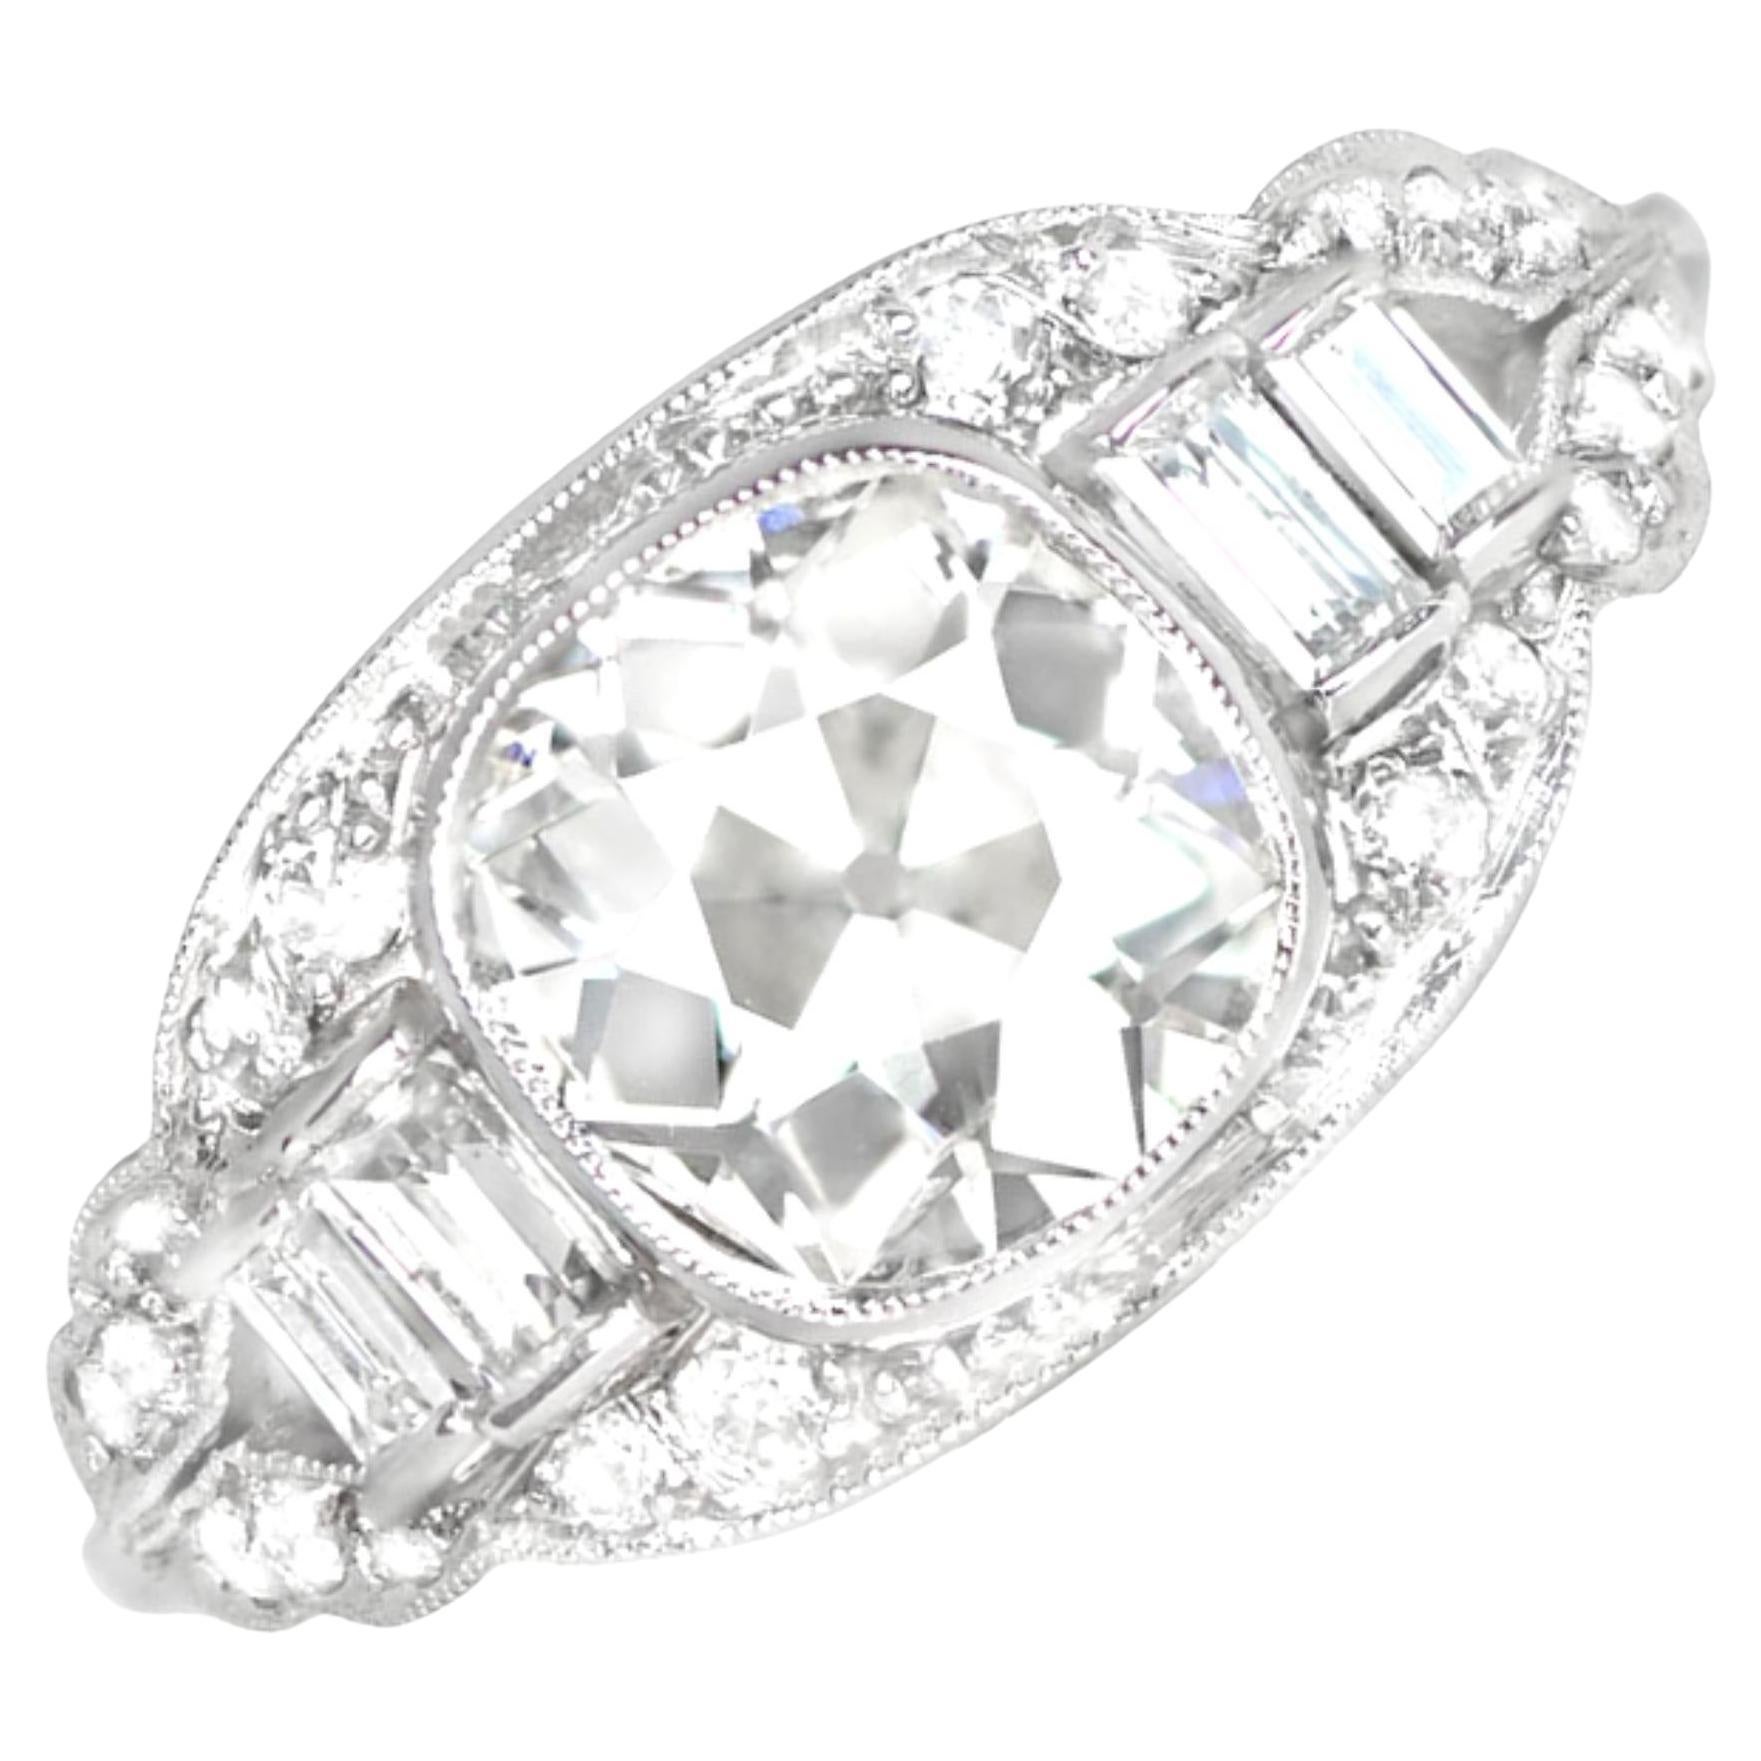 1.37 Carat Cushion-Cut Diamond Engagement Ring, Platinum